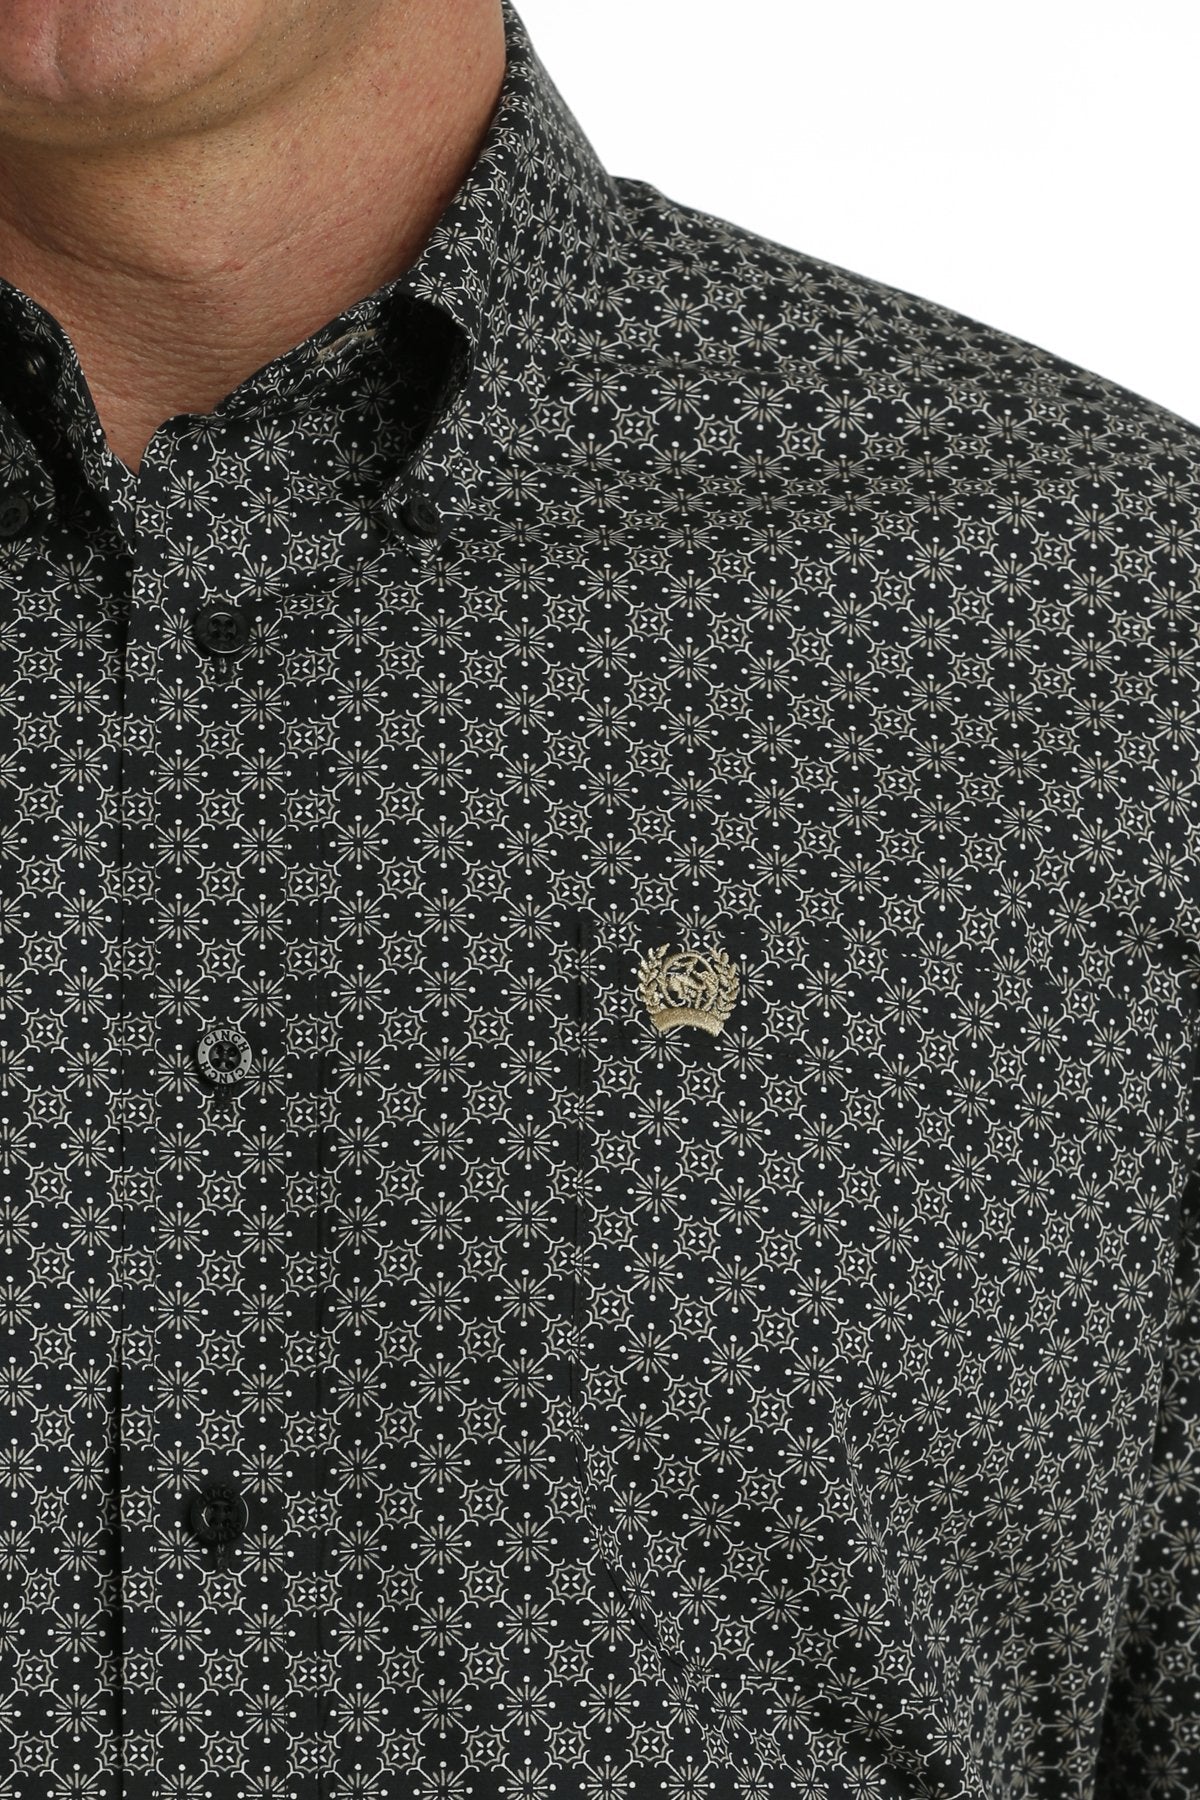 Cinch Men's S/S Classic Fit Geometric Western Button Down Shirt in Black